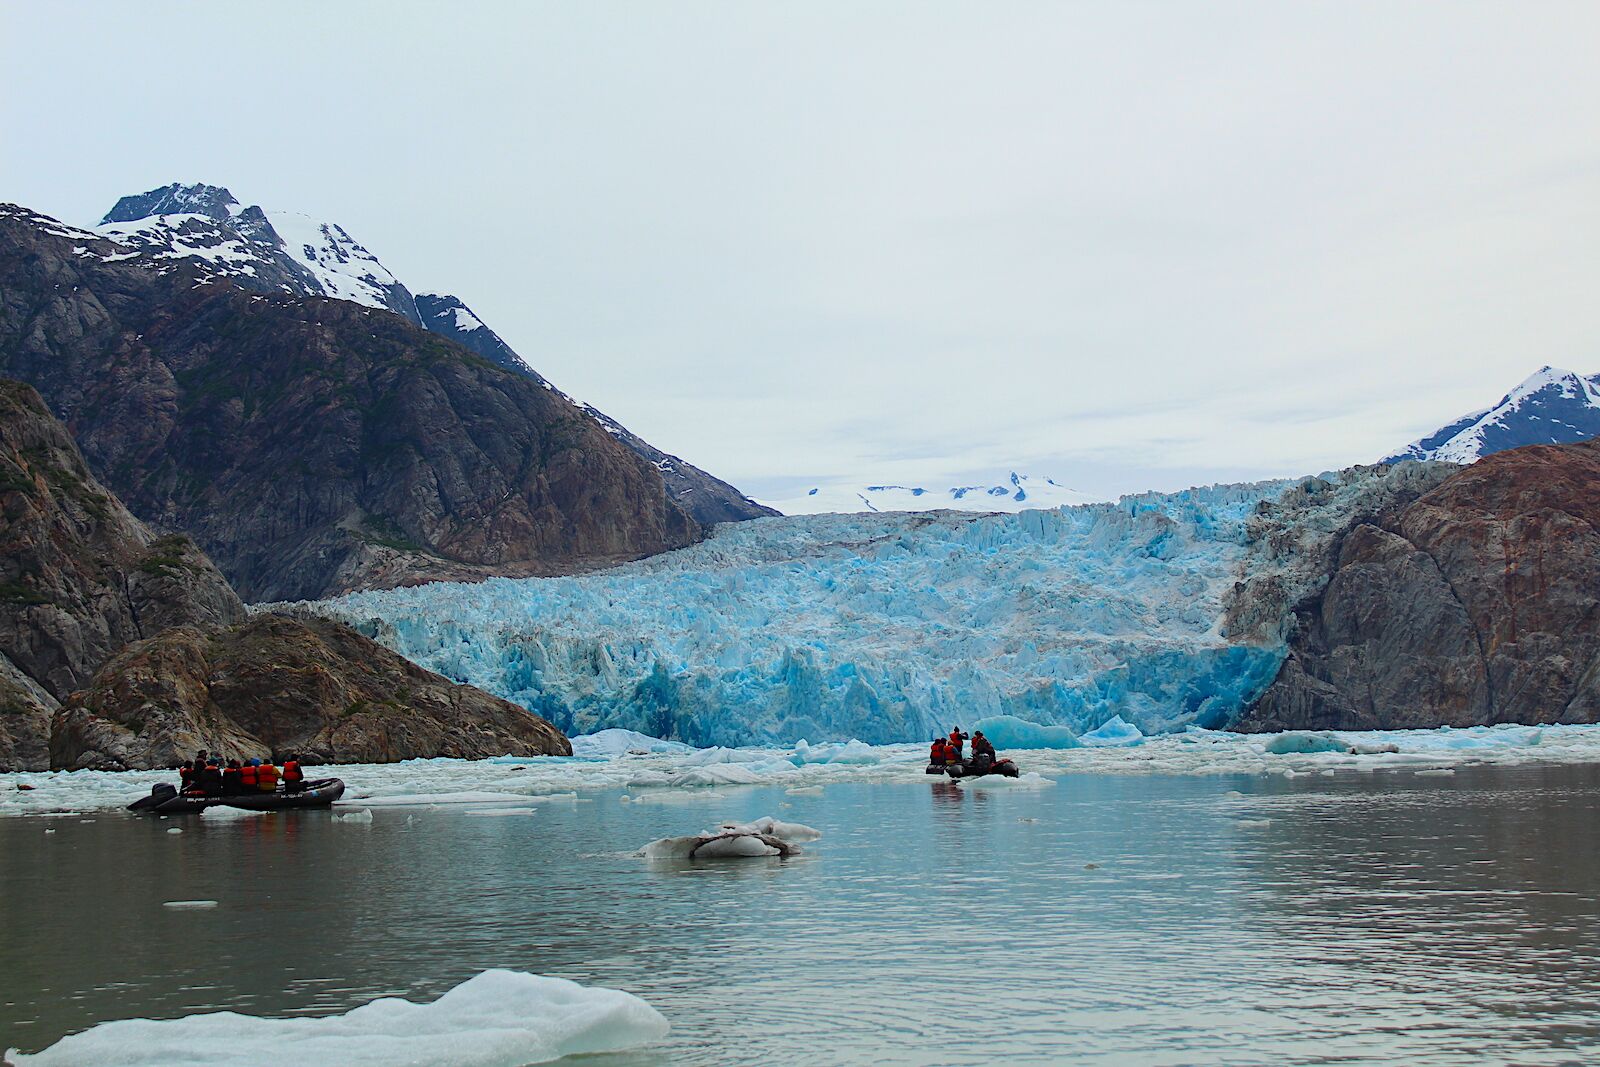 lindblad expeditions alaska cruises